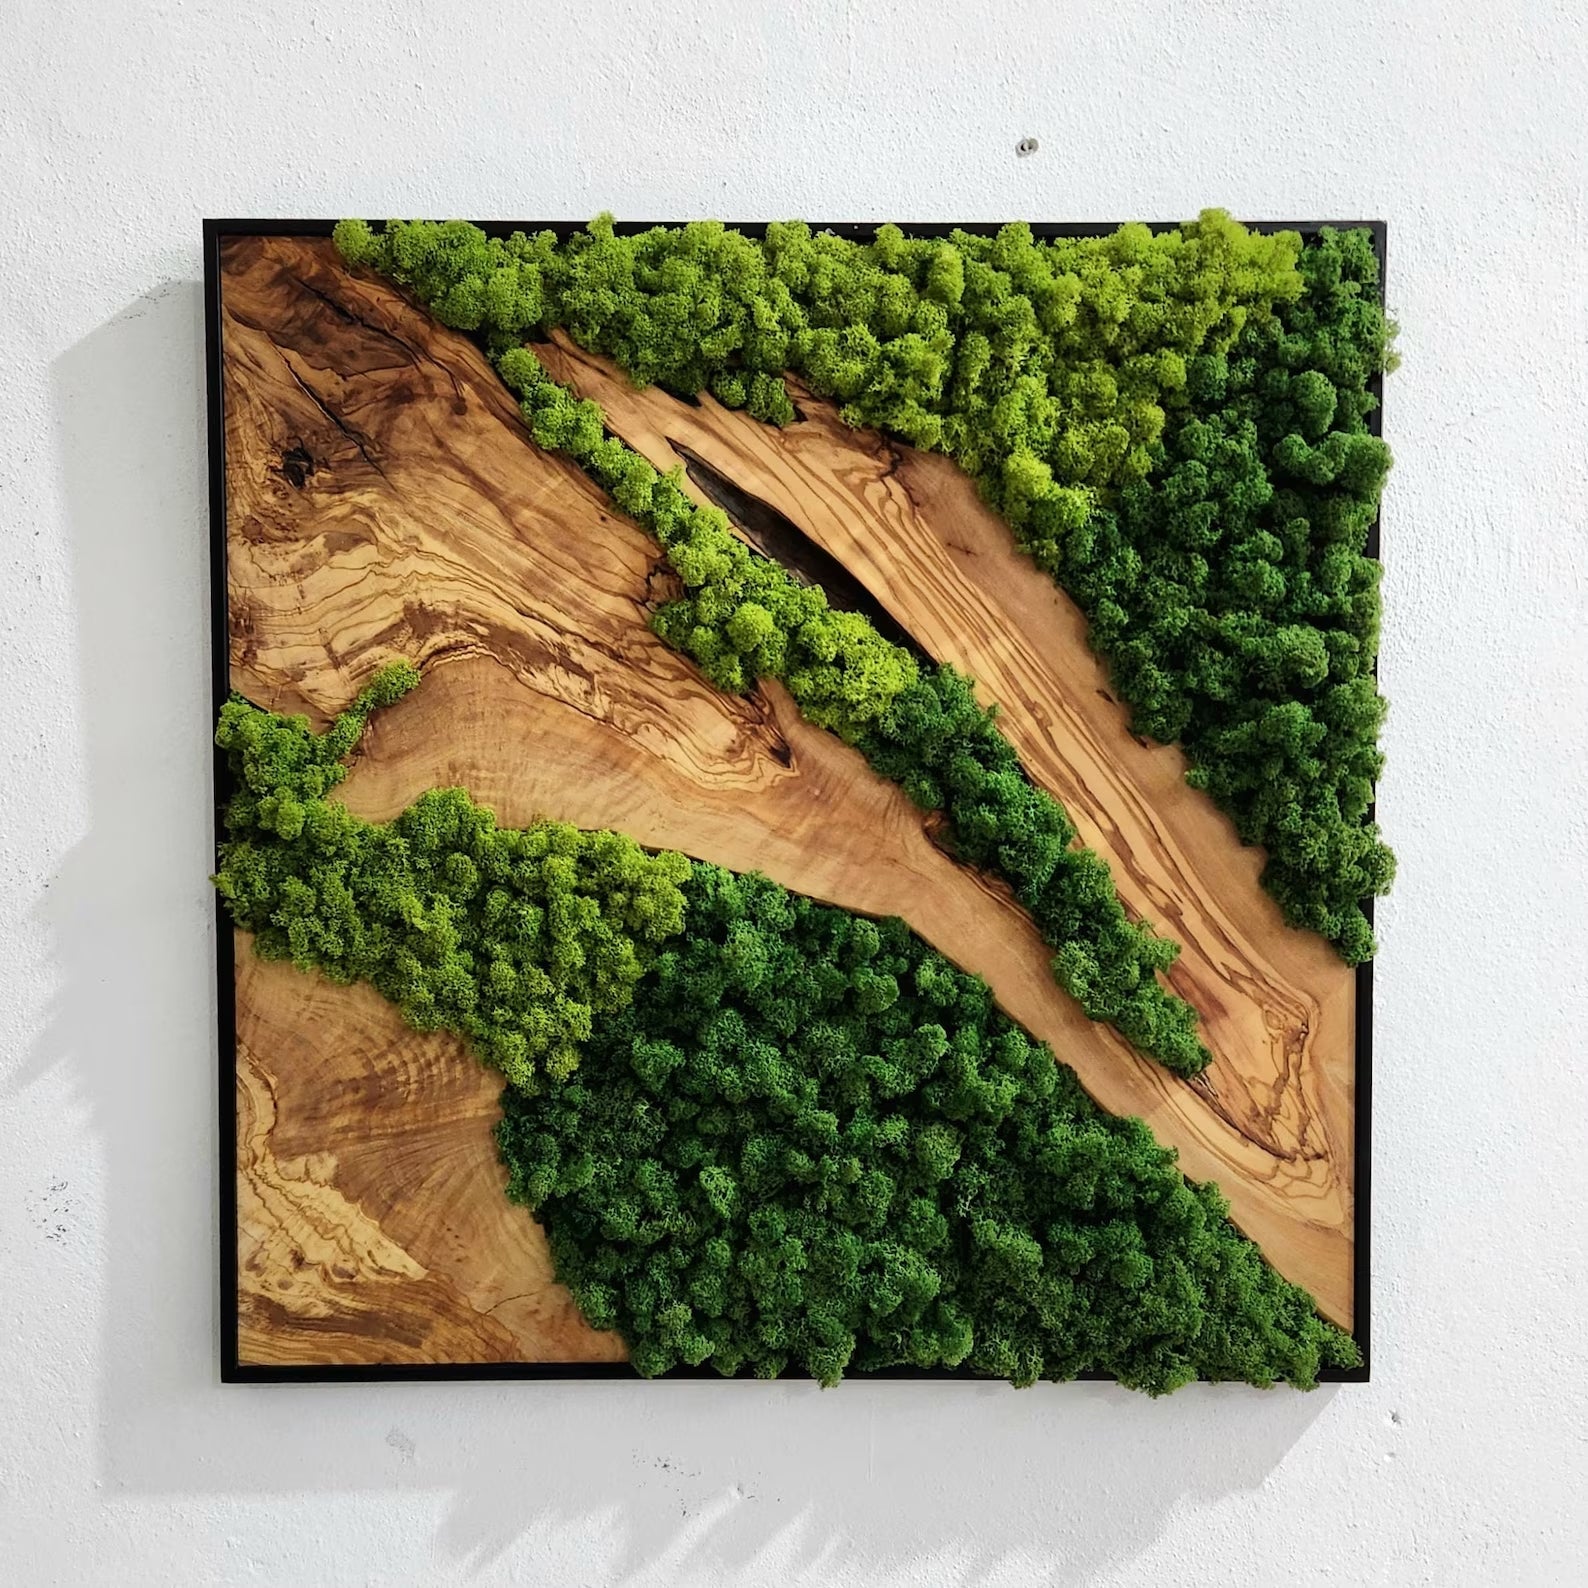 Custom Made Moss and Olive Wood Wall Art | Premium Handmade Wall Sculptures